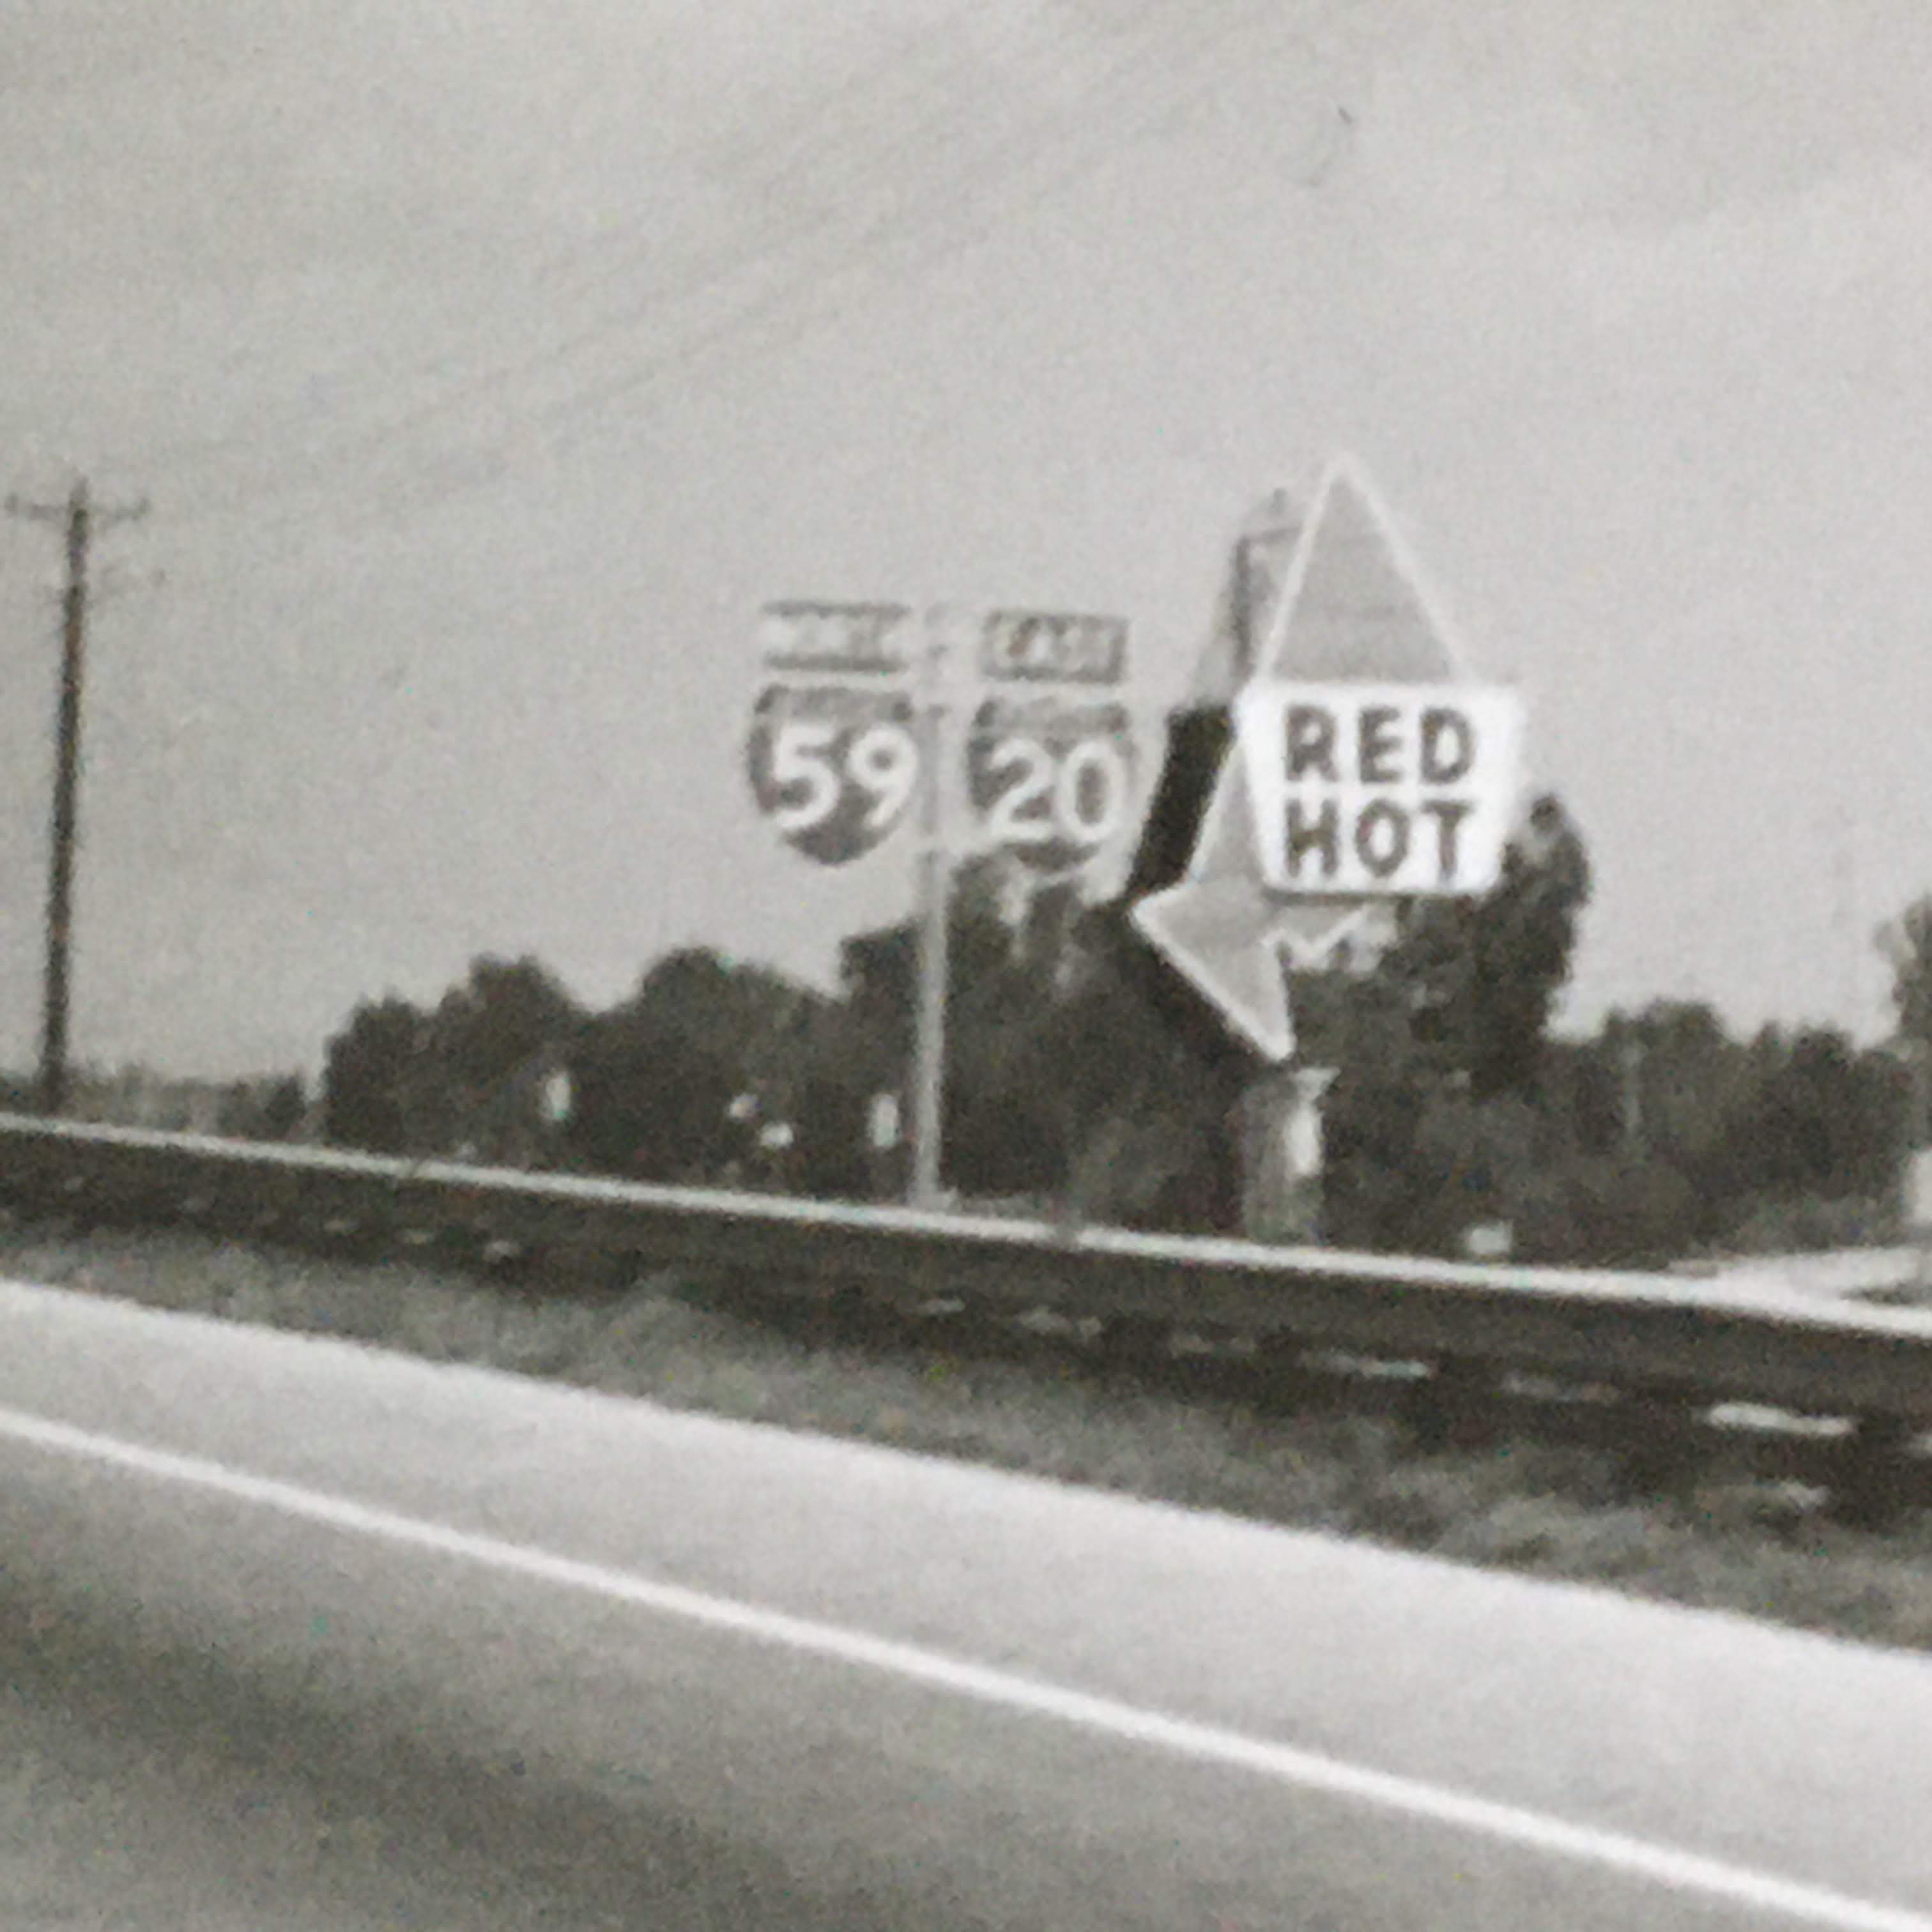 Red Hot sign in Laurel